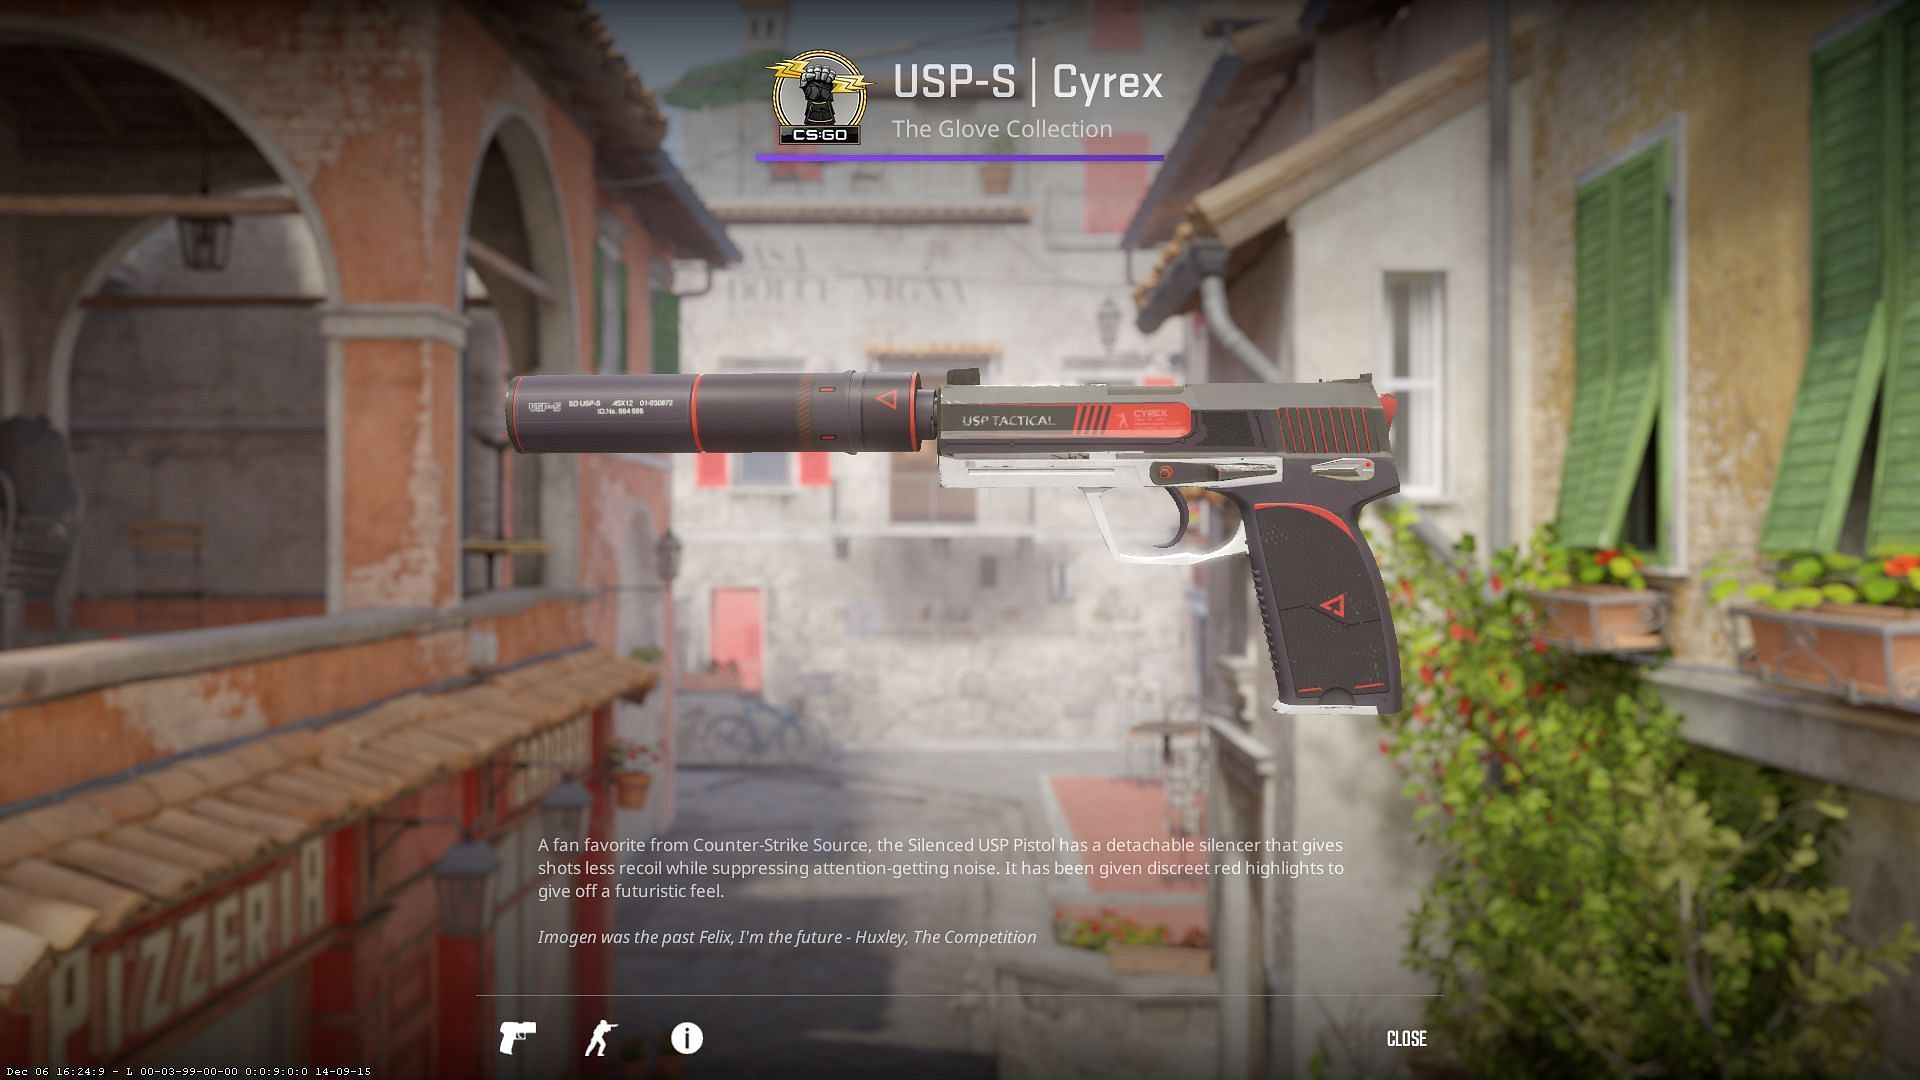 The USP-S Kill Cyrex (Image via Valve)